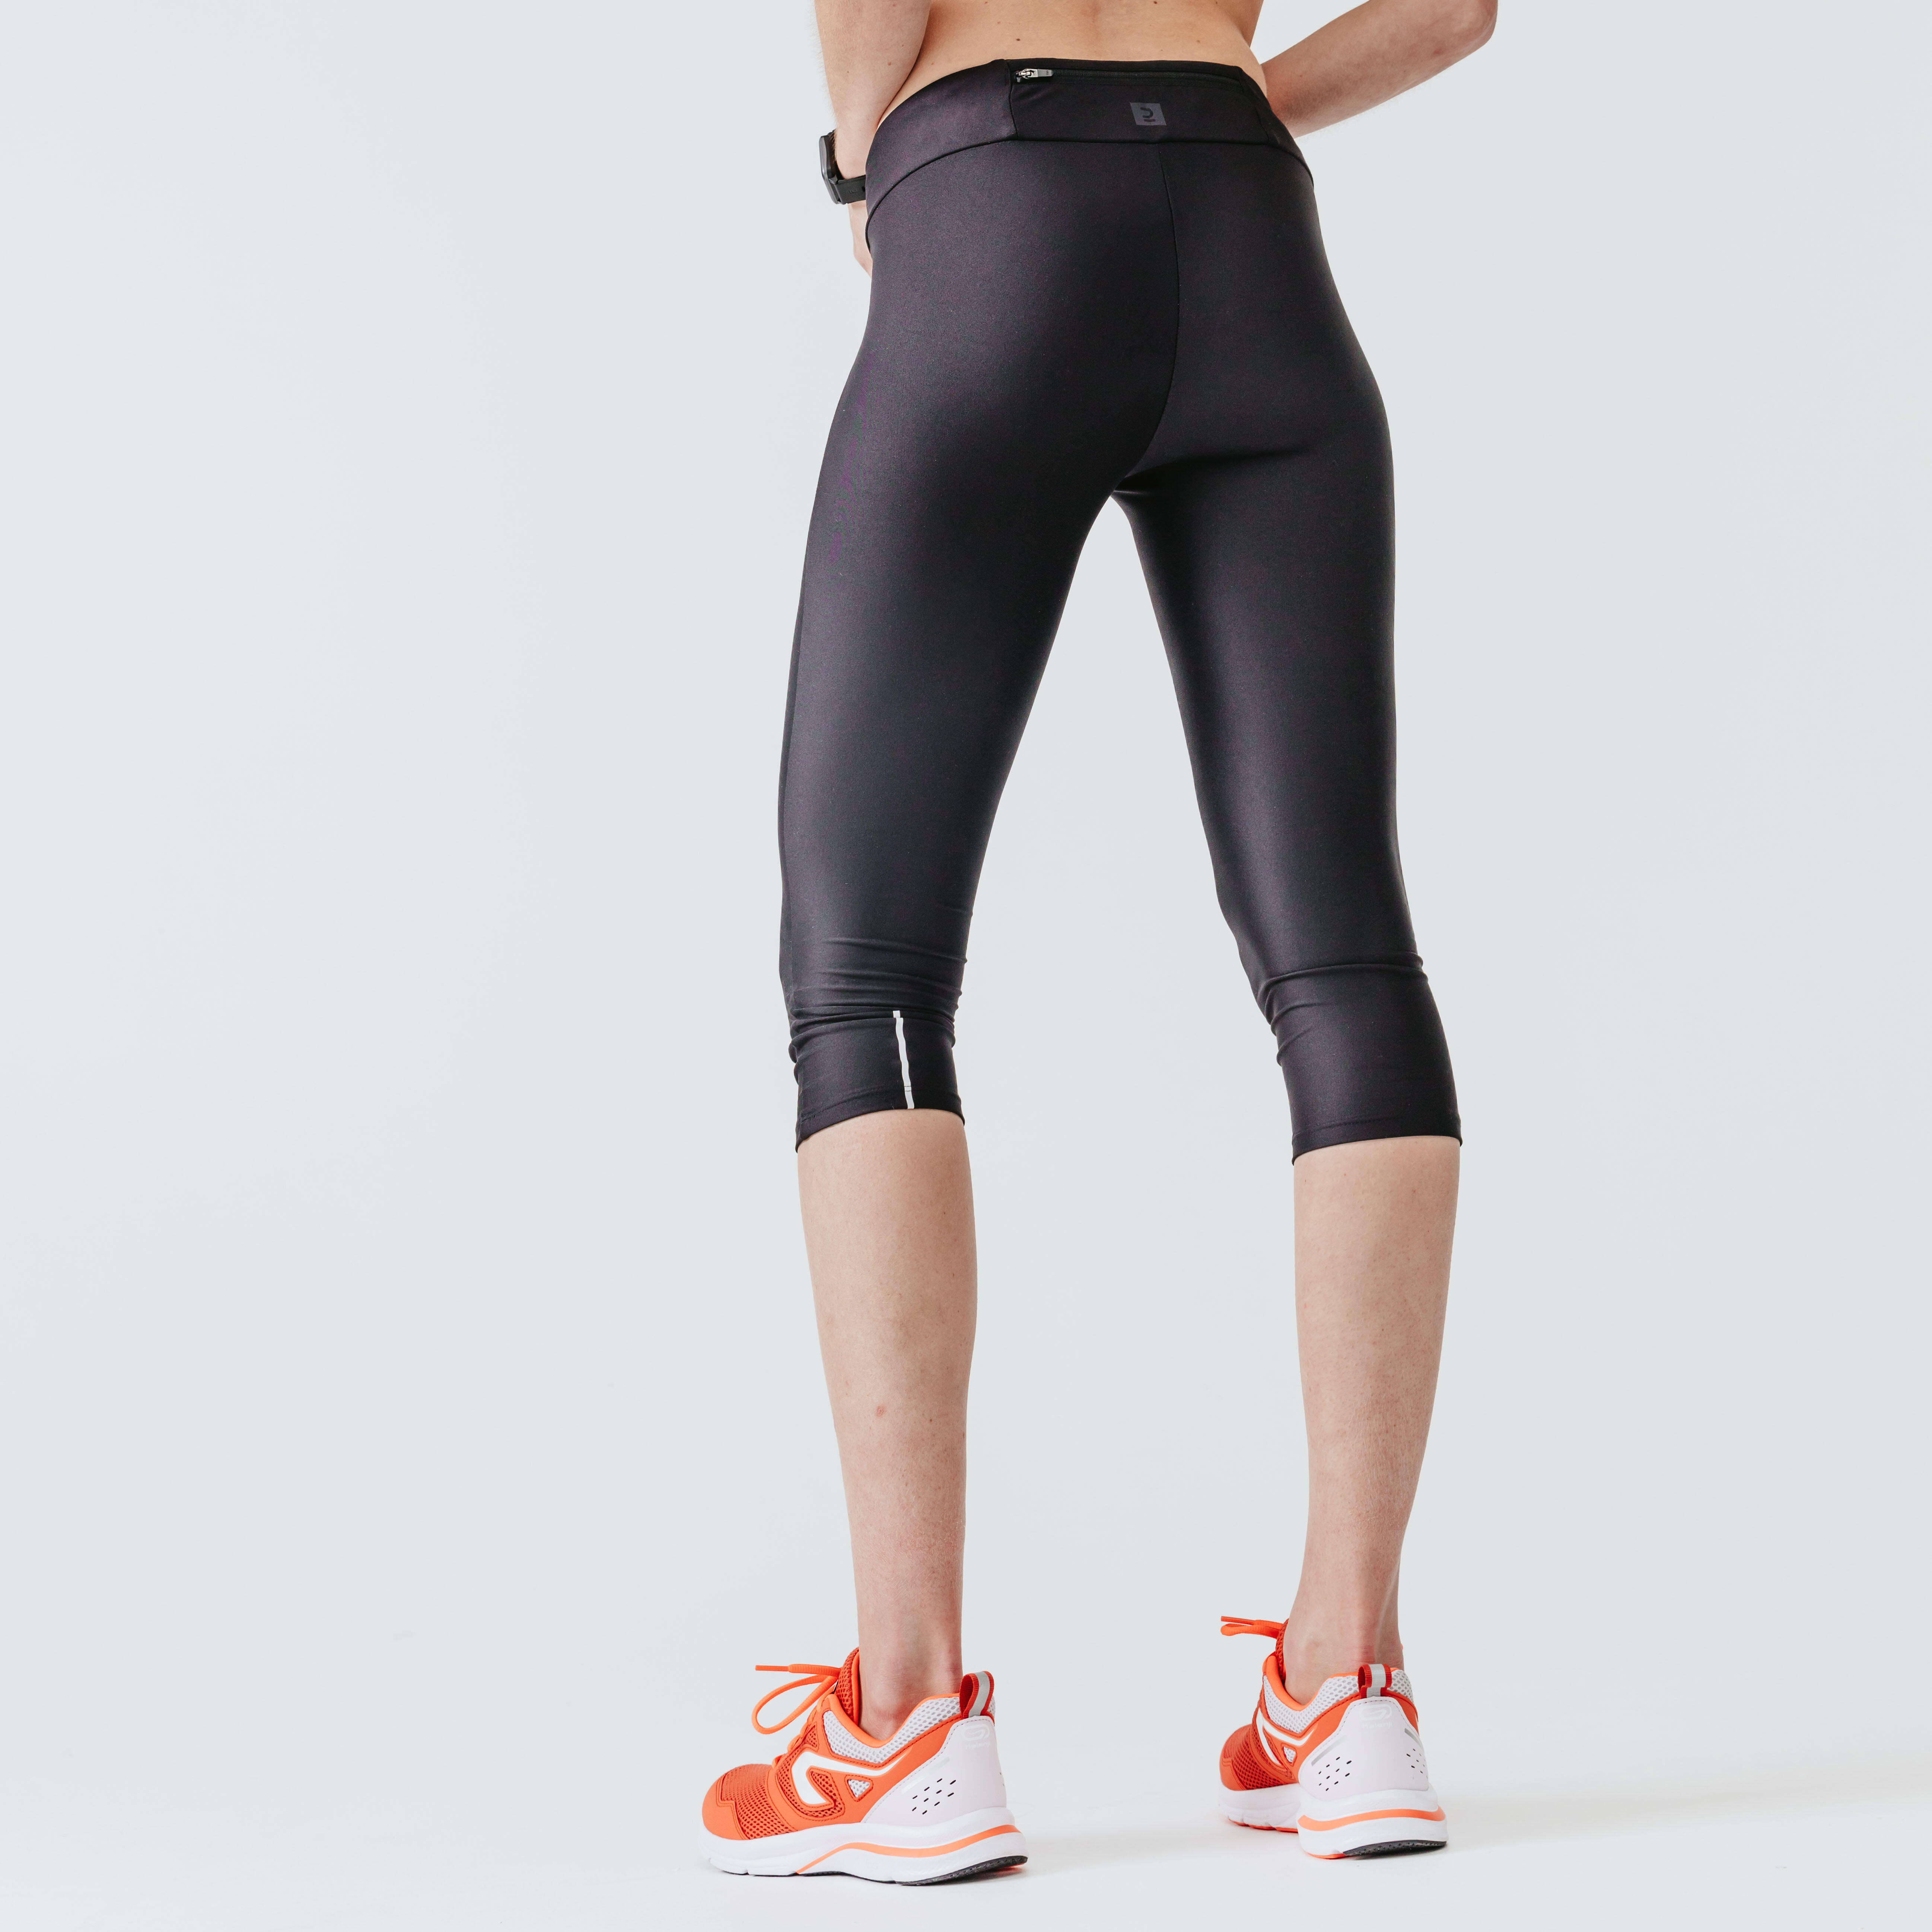 Run, Don't Walk to Buy This Popular 4-Pack of Leggings That Start